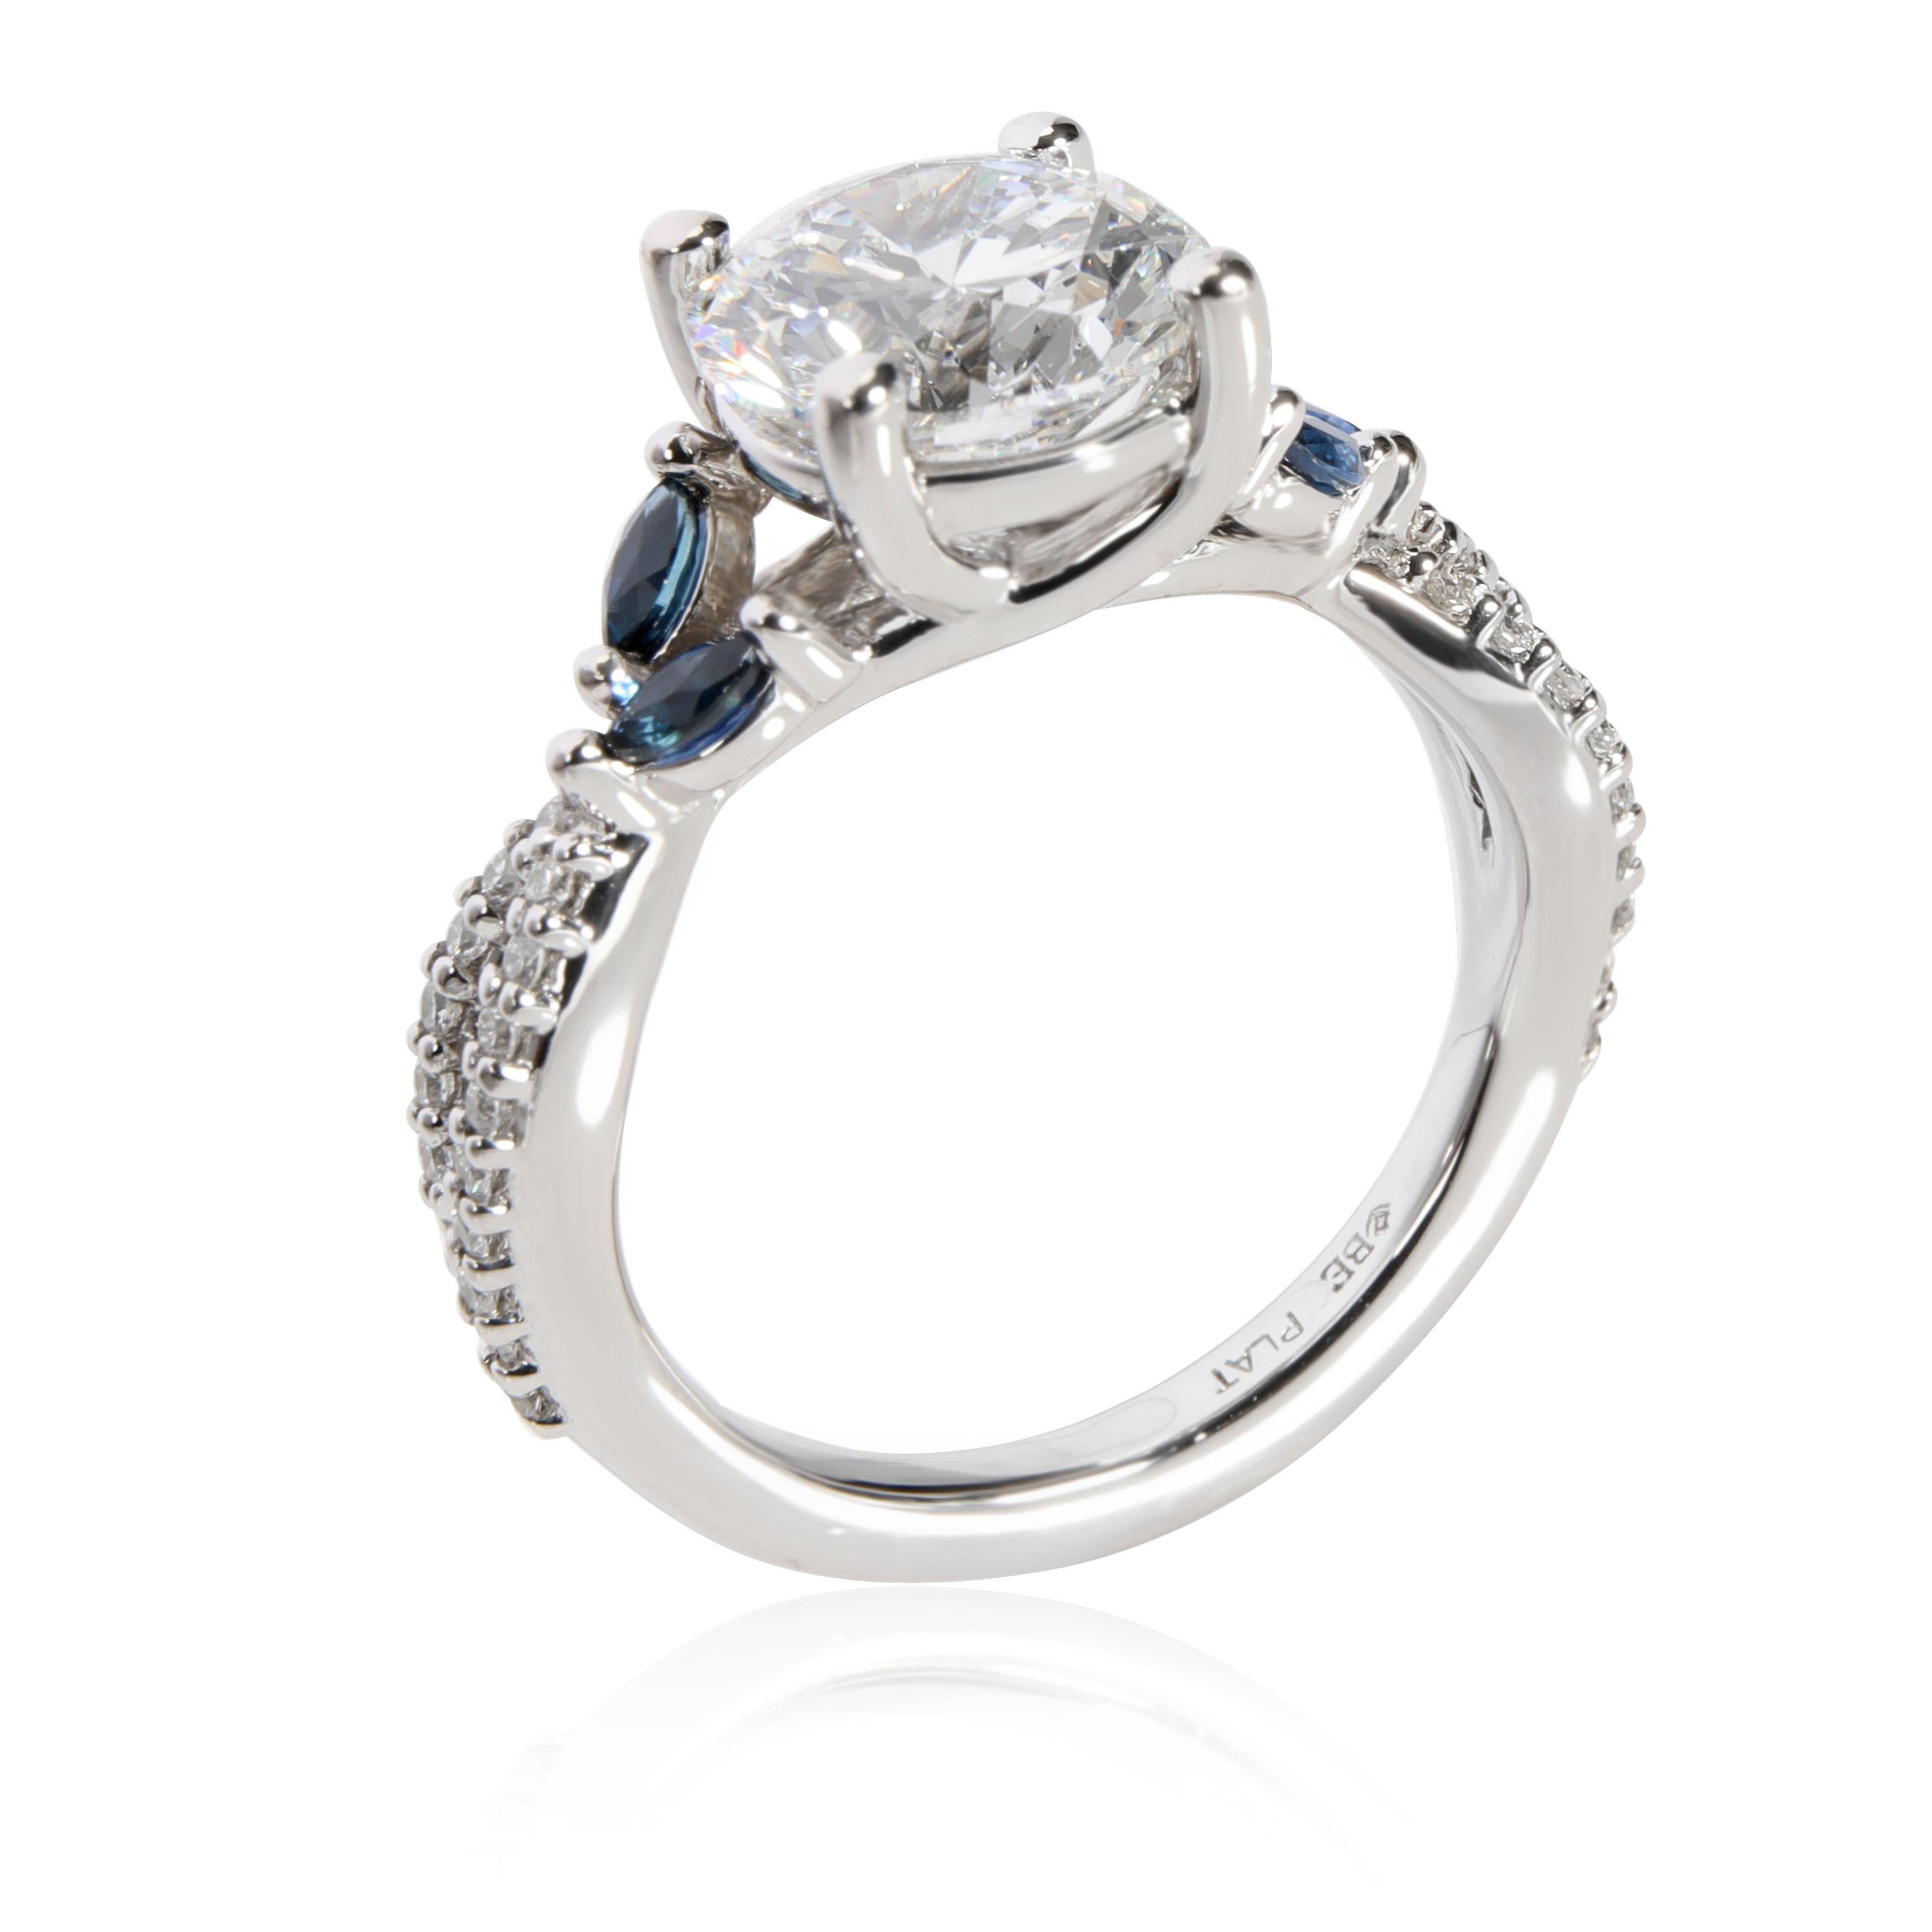 Brilliant Earth Diamond & Sapphire Platinum Engagement Ring GIA D VVS1 2.20 CTW

PRIMARY DETAILS
SKU: 109780
Listing Title: Brilliant Earth Diamond & Sapphire Platinum Engagement Ring GIA D VVS1 2.20 CTW
Condition Description: Retails for 42,000